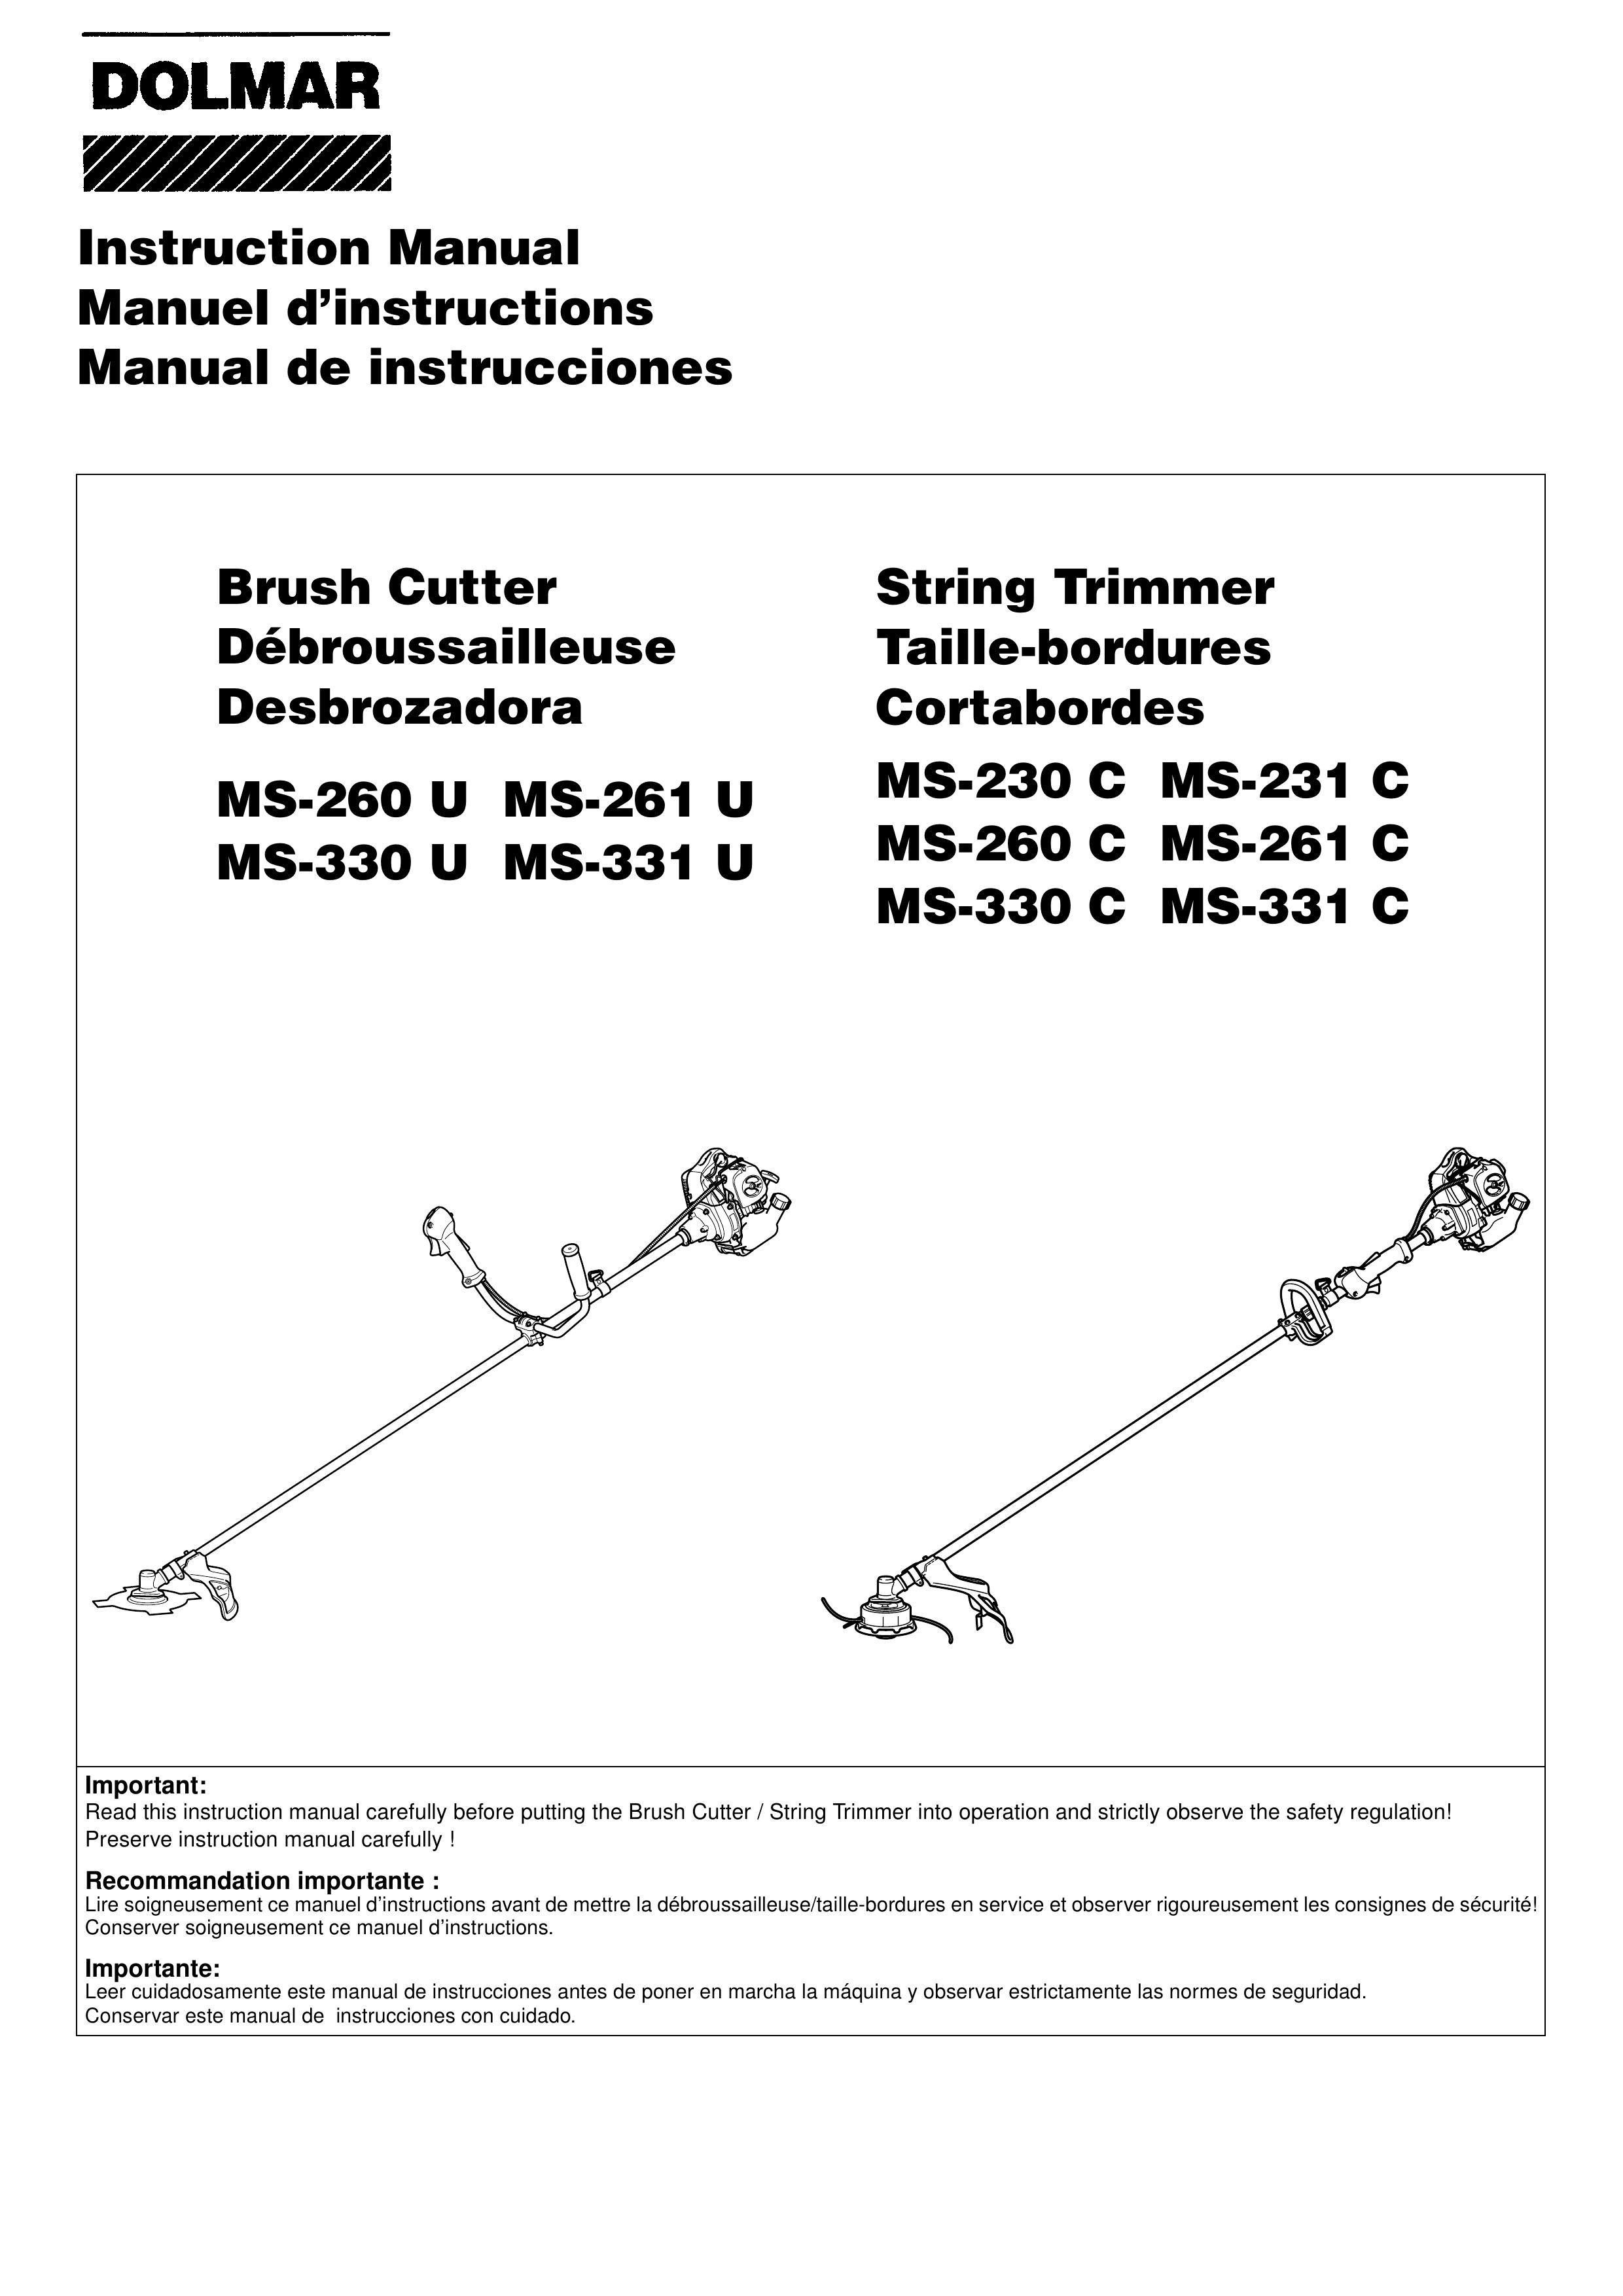 Dolmar MS-230 C Brush Cutter User Manual